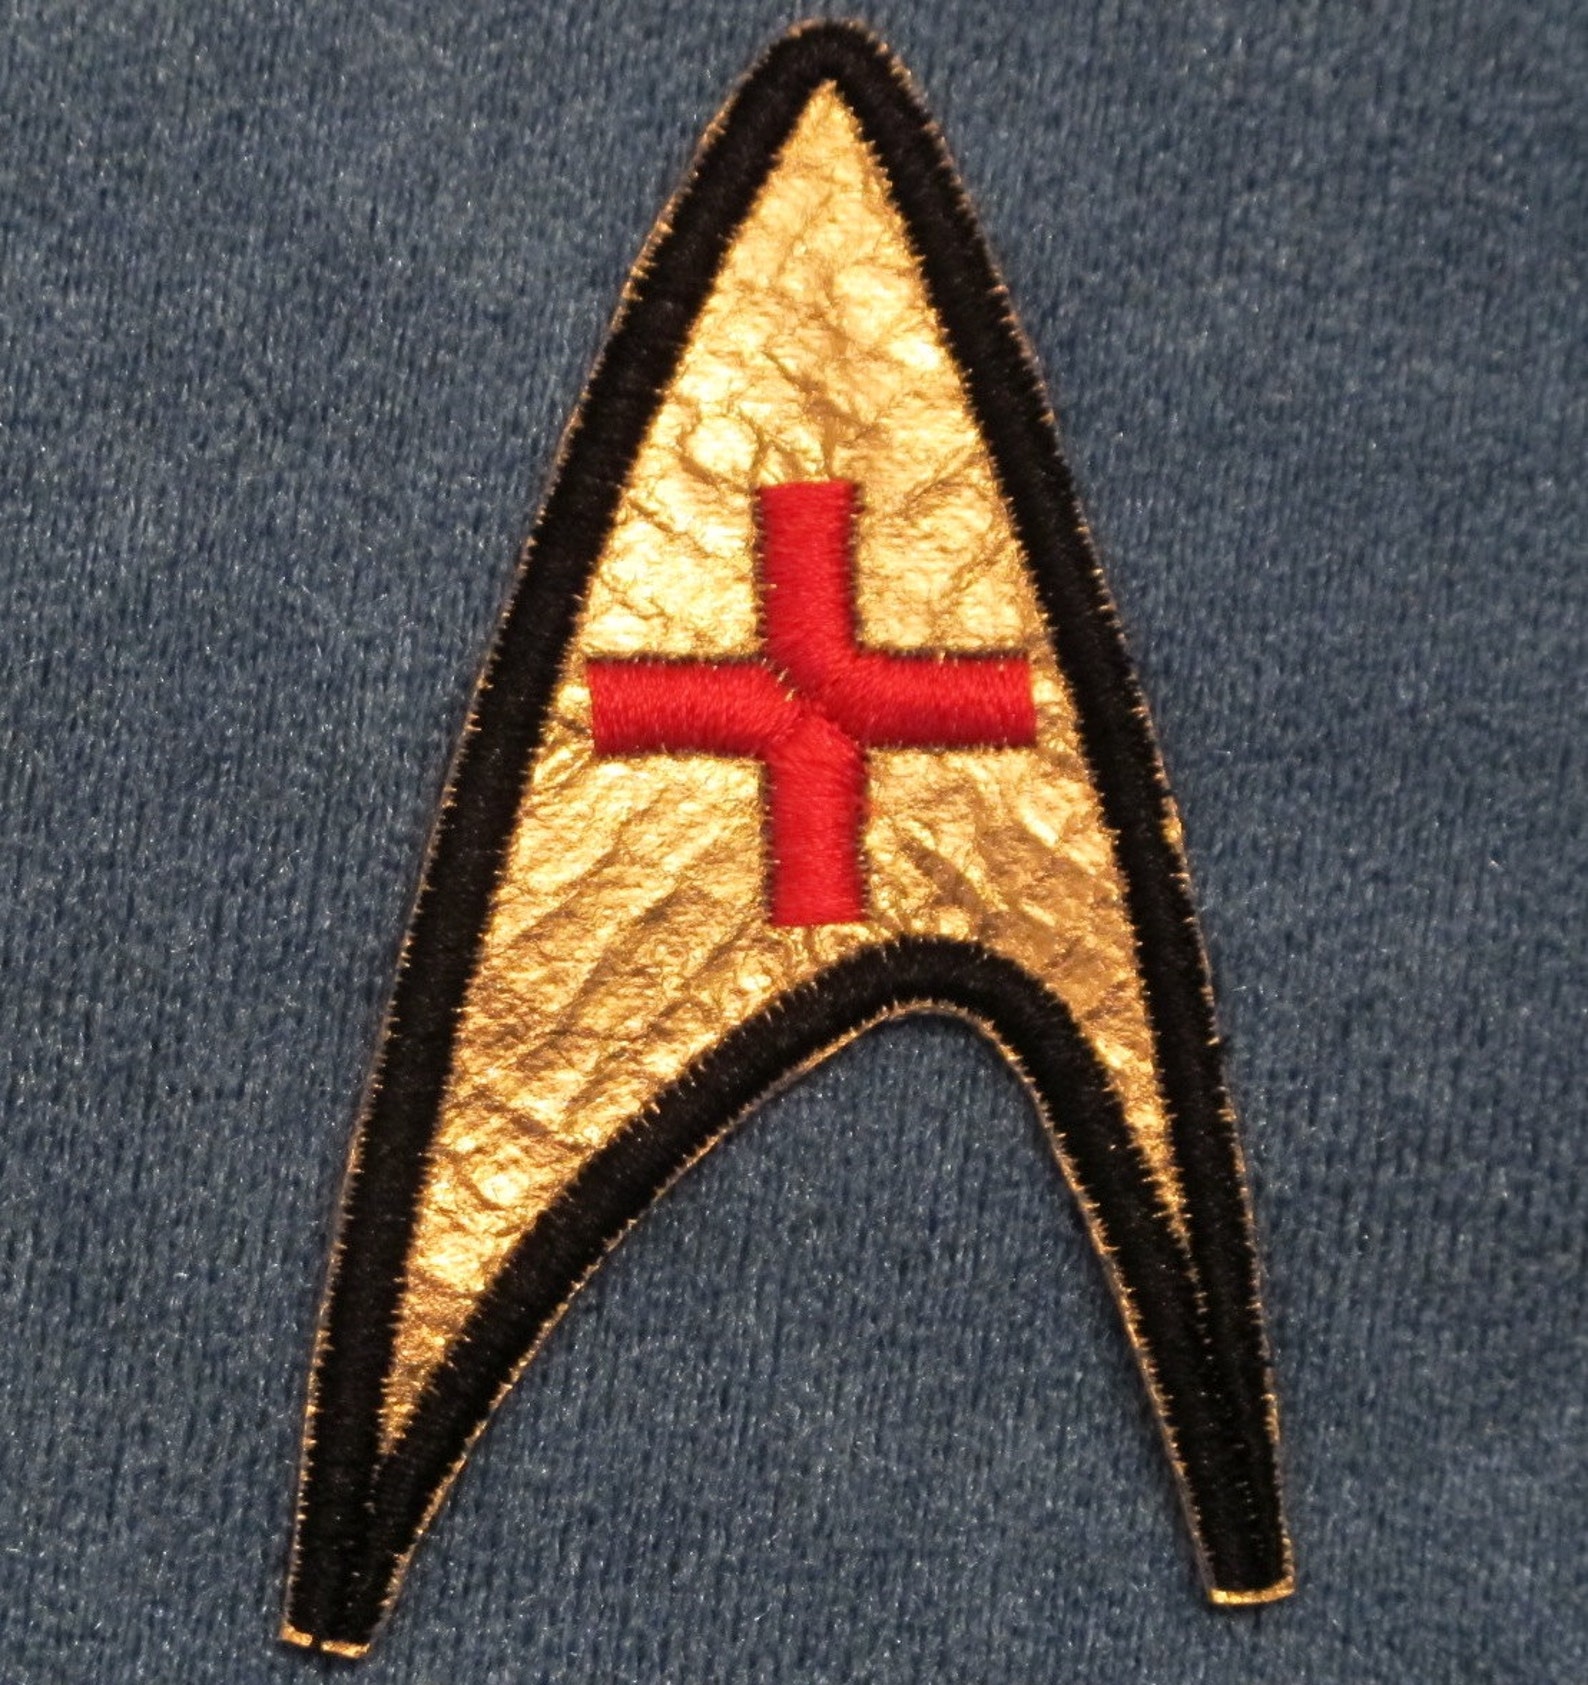 star trek tos uniform insignia